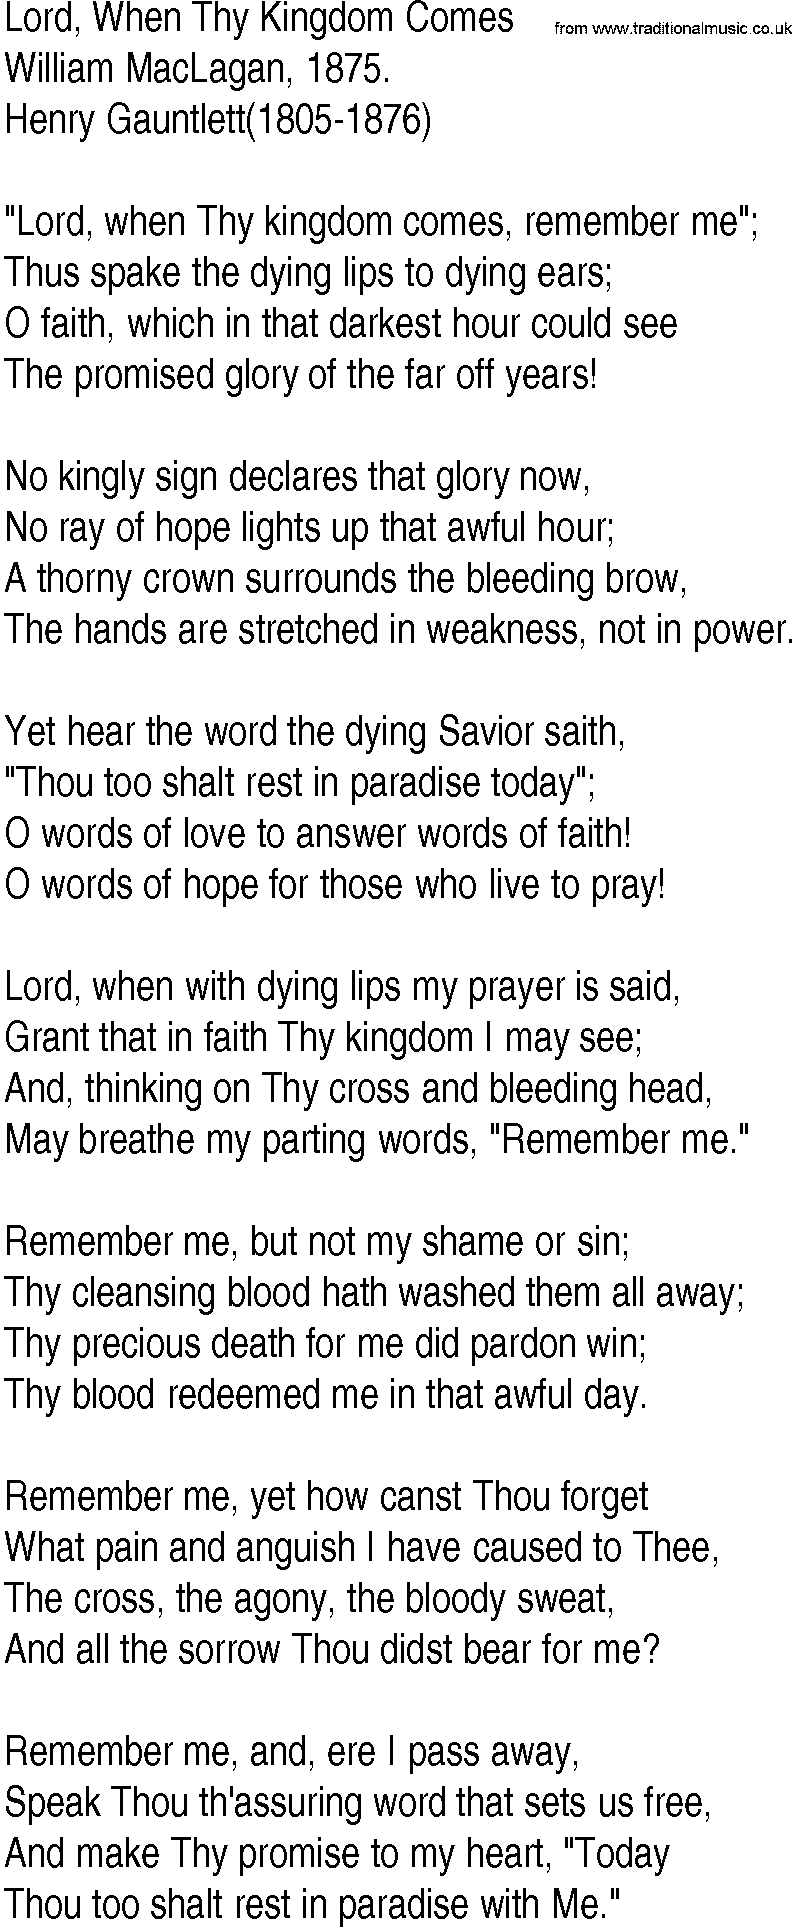 Hymn and Gospel Song: Lord, When Thy Kingdom Comes by William MacLagan lyrics